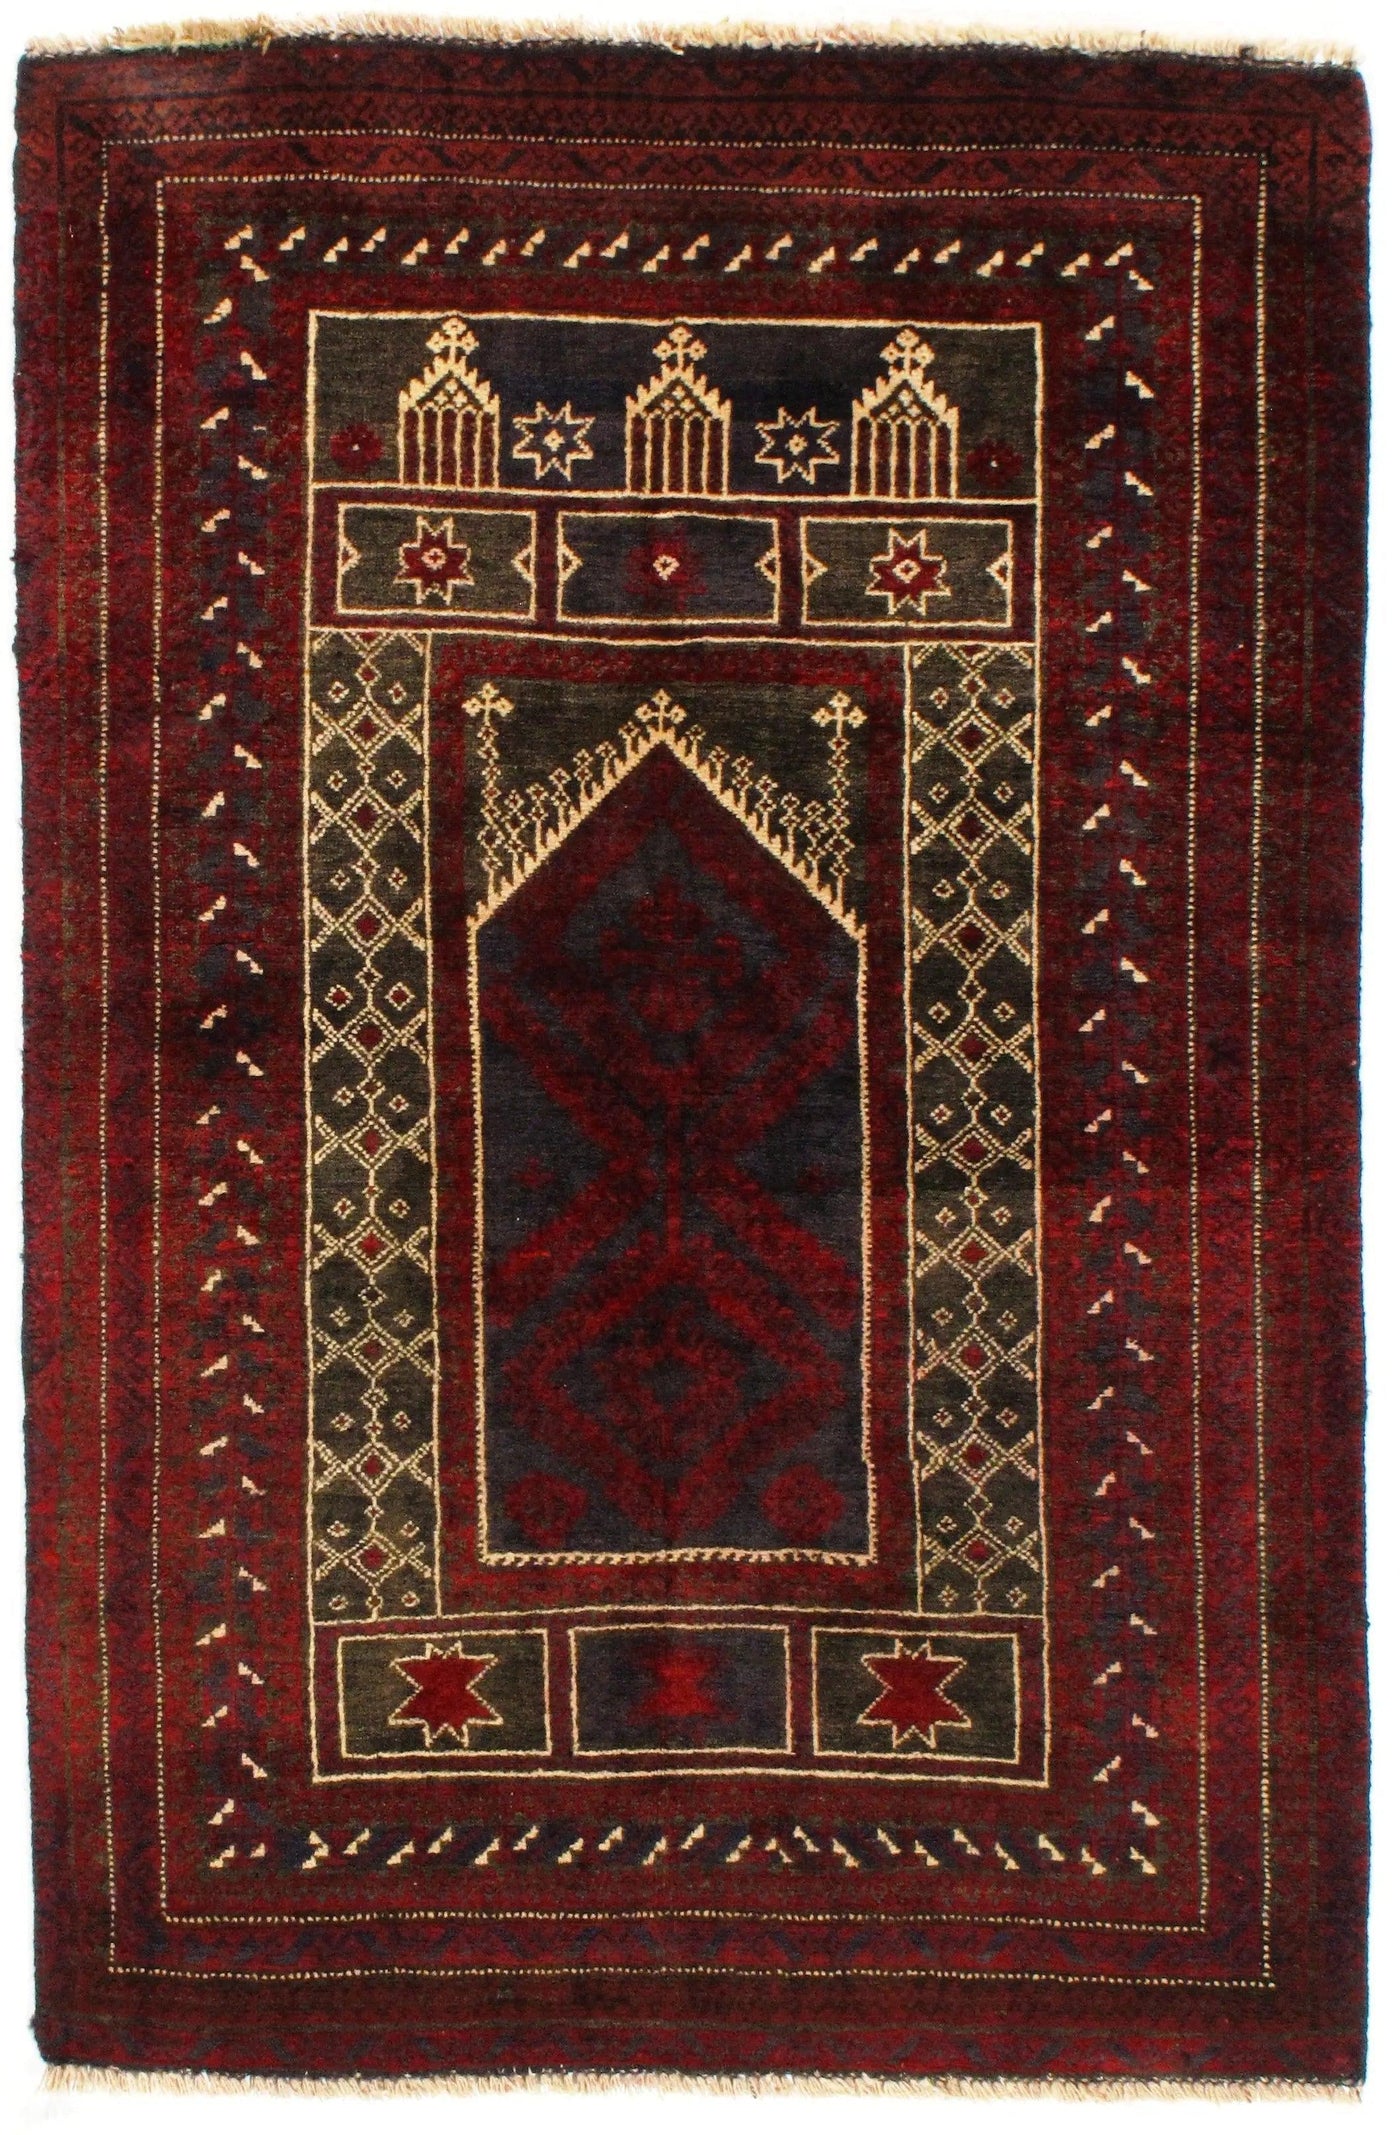 Red Balouchi Prayer Rug - 3' x 4'